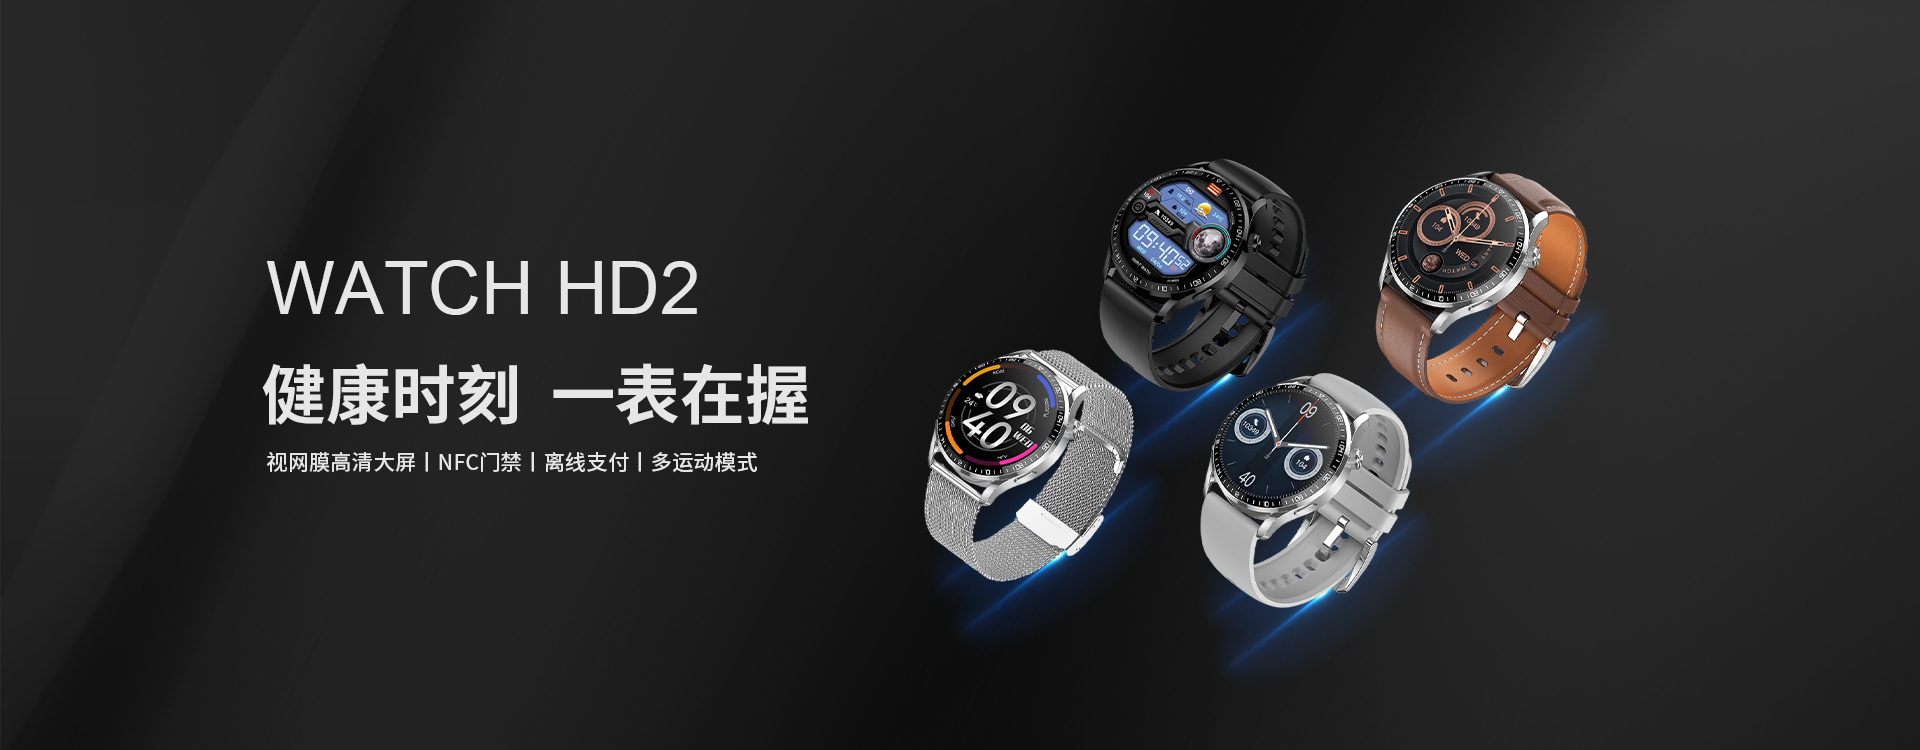 HD2智能手表